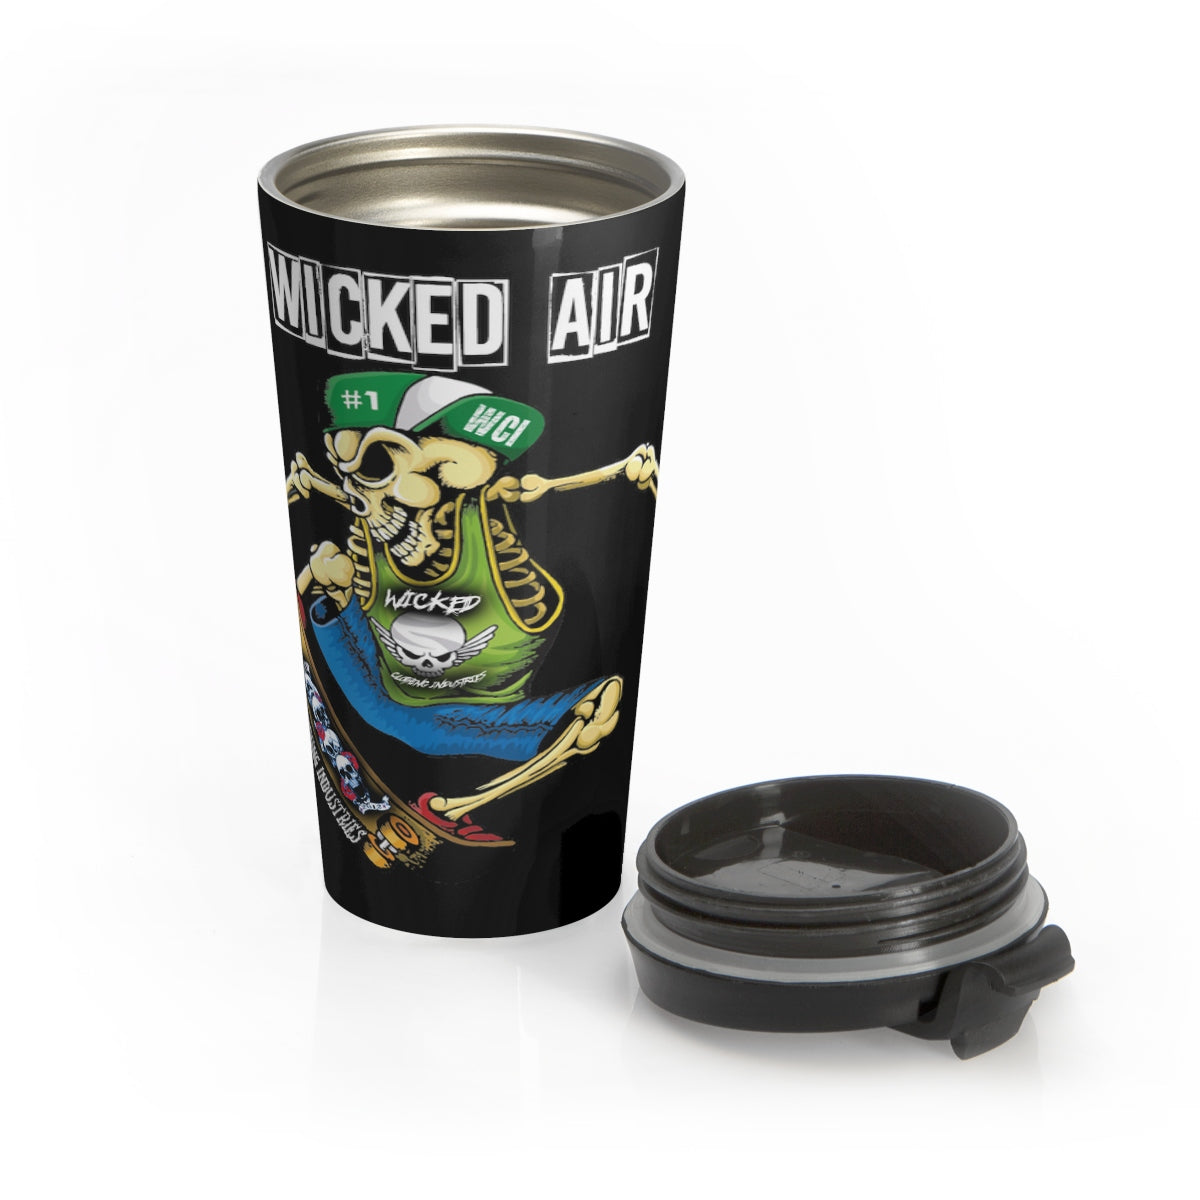 Stainless Steel Travel Mug WICKED AIR